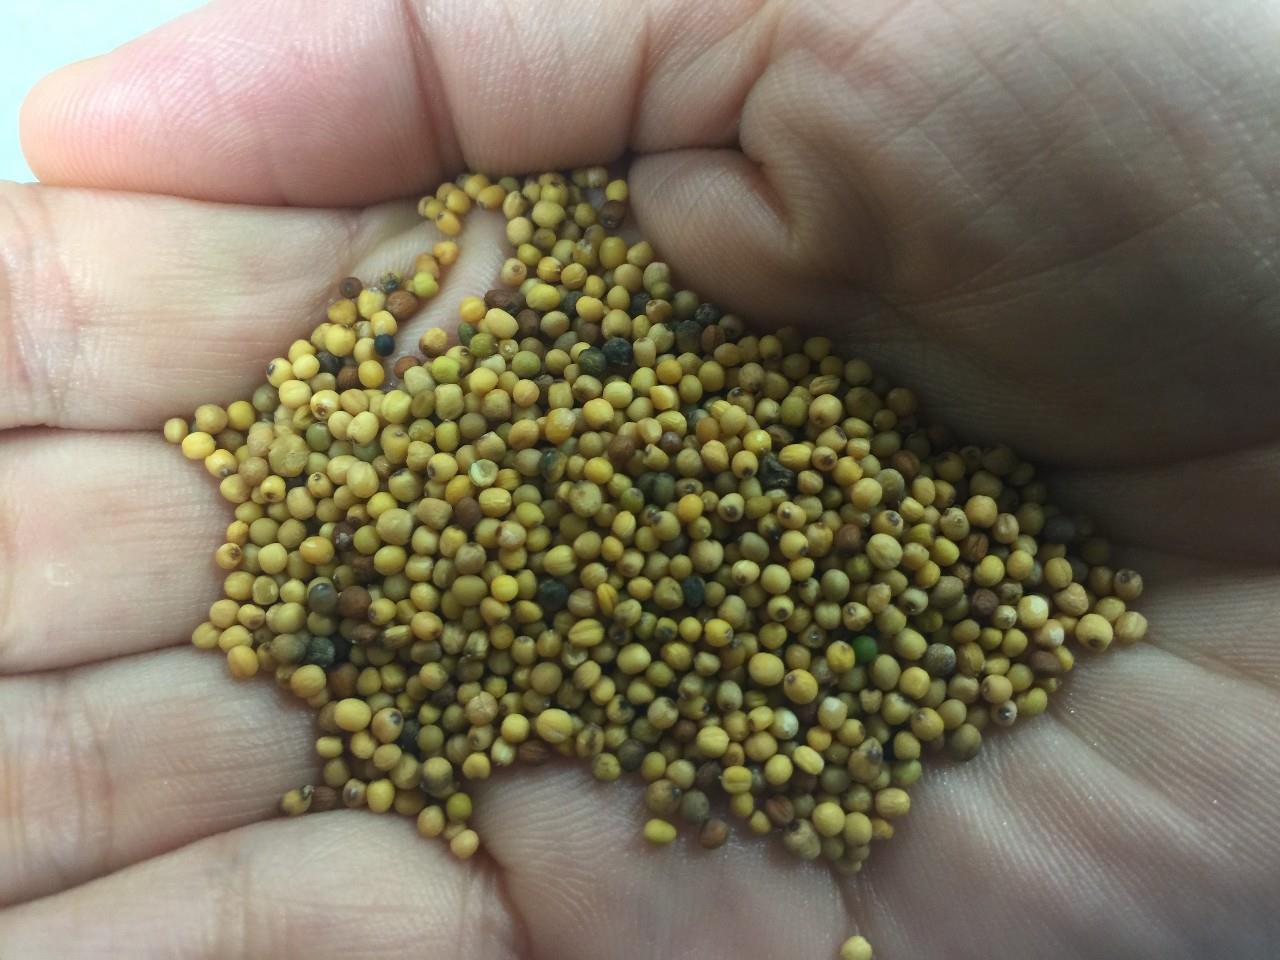 Brassica Carinata, semente de mostarda industrial utilizada para produzir o biocombustível